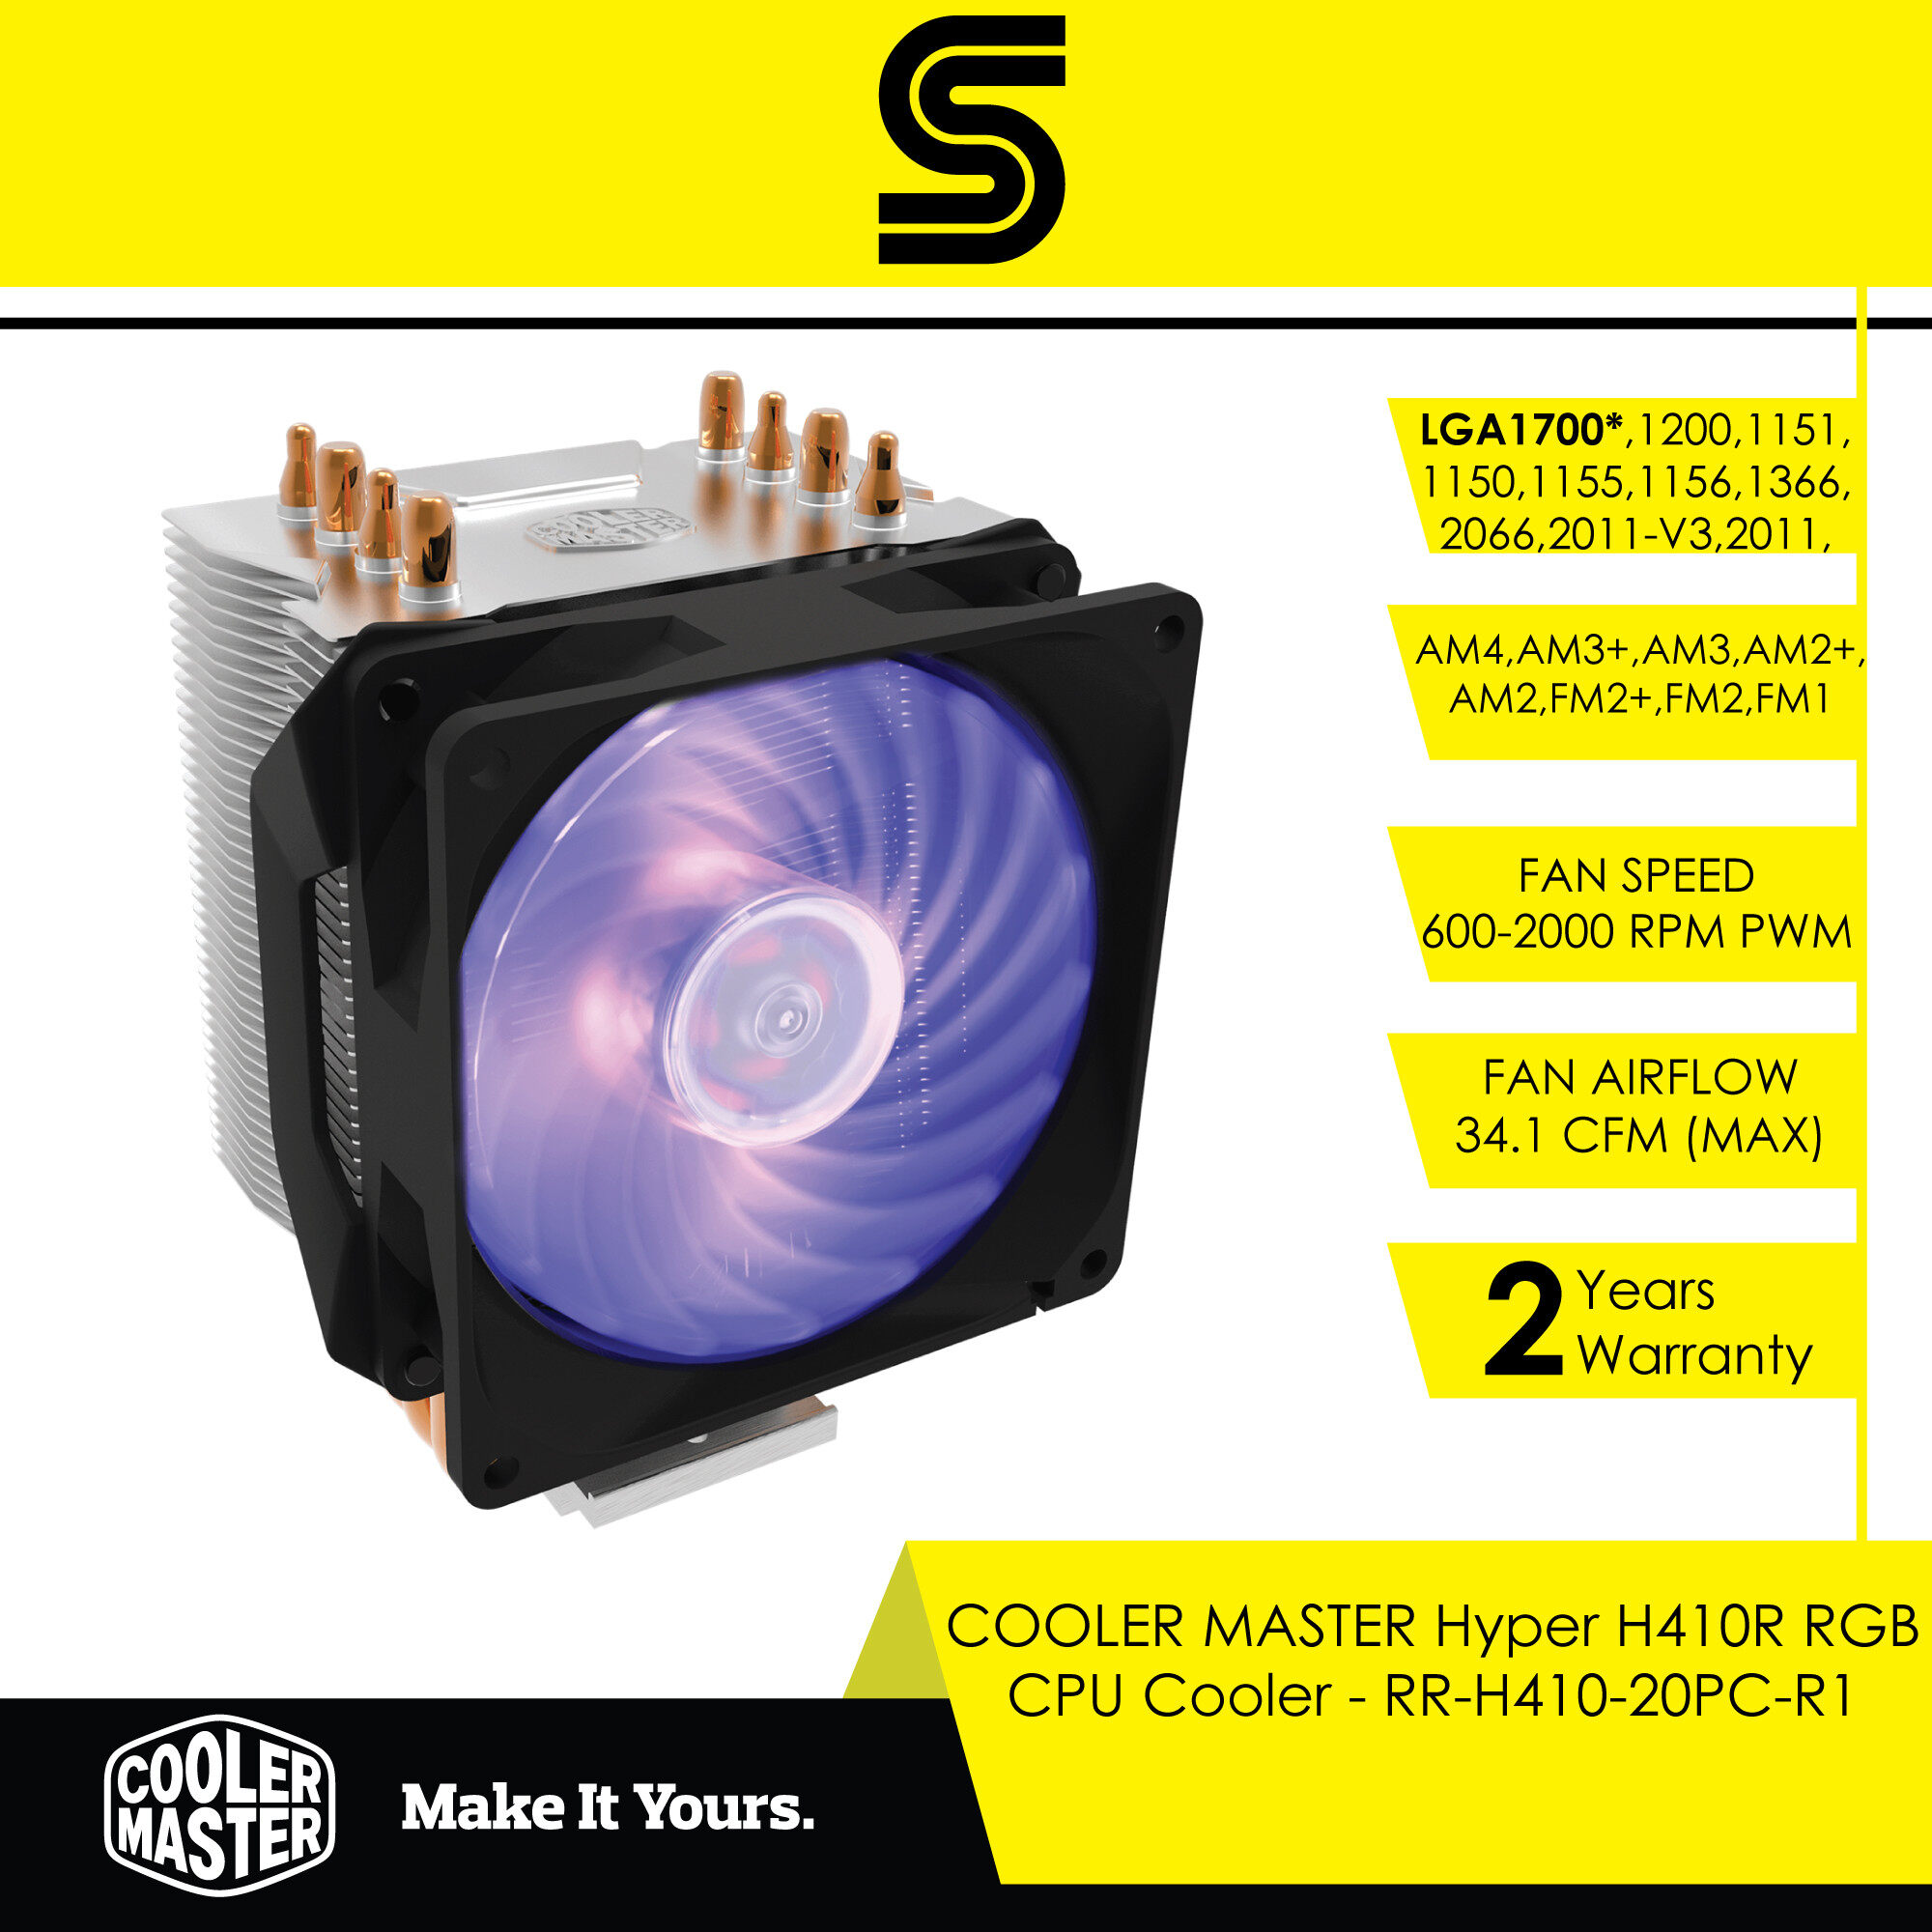 COOLER MASTER Hyper H410R RGB CPU Cooler - RR-H410-20PC-R1